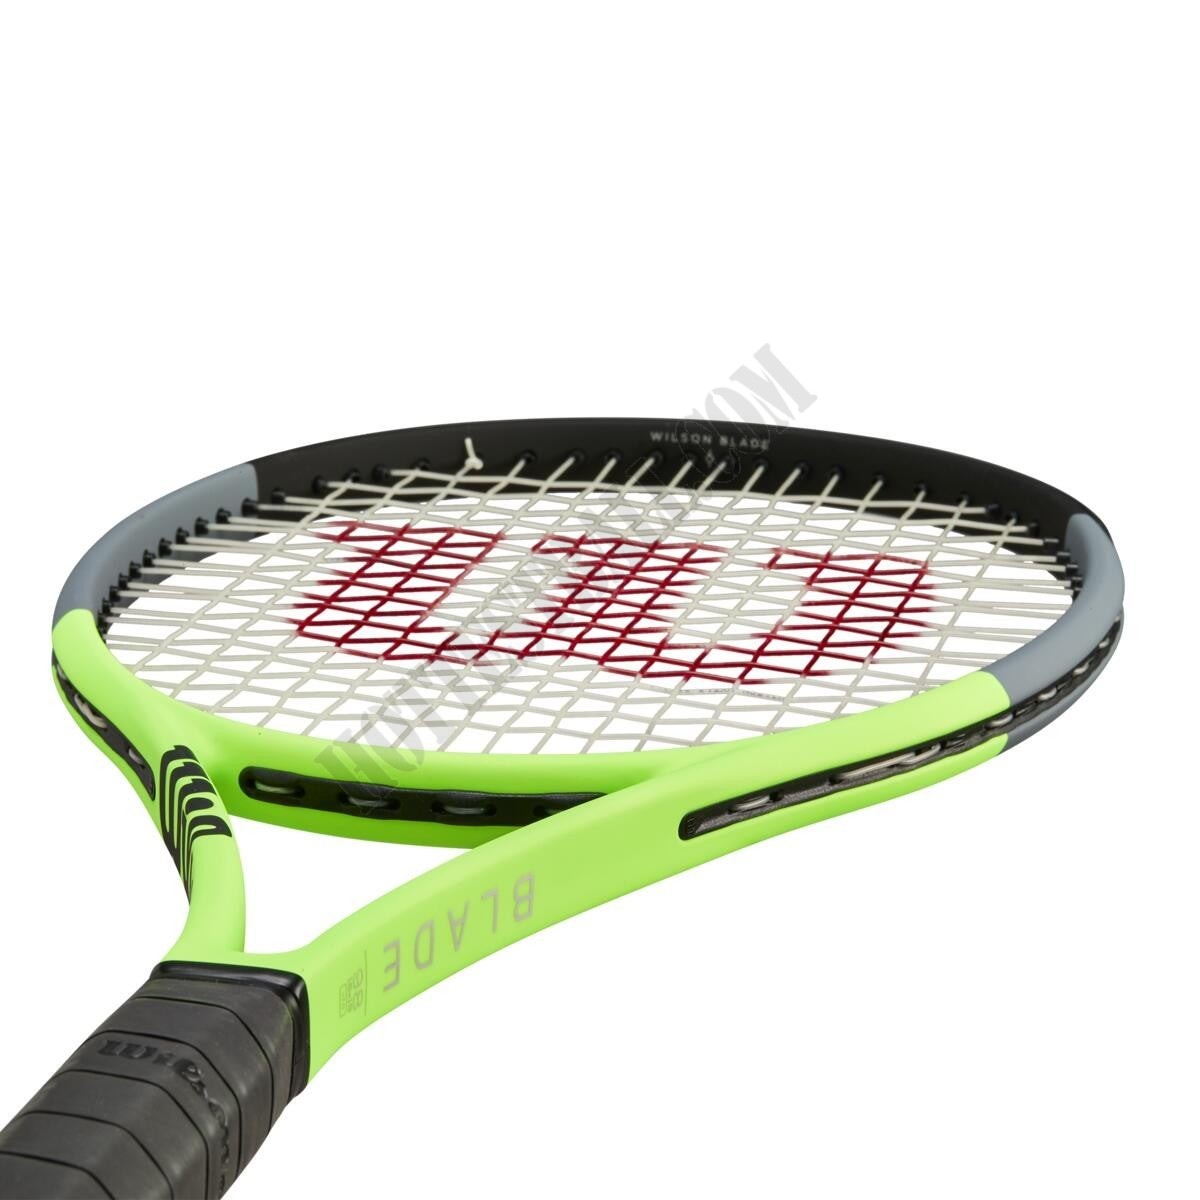 Blade 98 (16x19) v7 Reverse Tennis Racket - Wilson Discount Store - -4